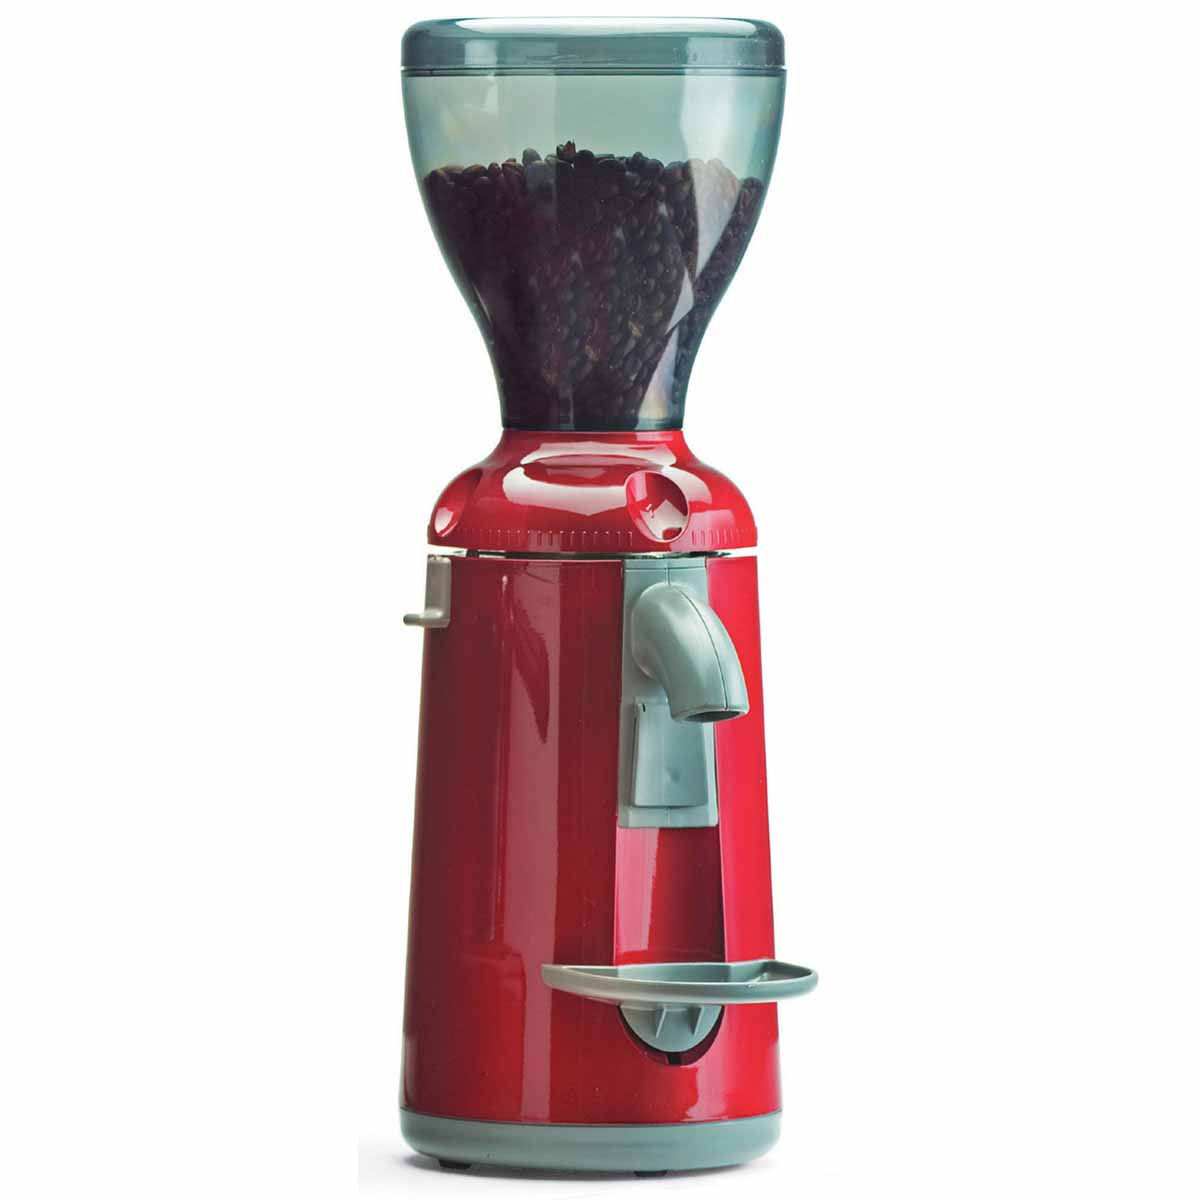 GRNTA - GOOD POWER COFFEE MACHINE WITH REASONABLE PRICE